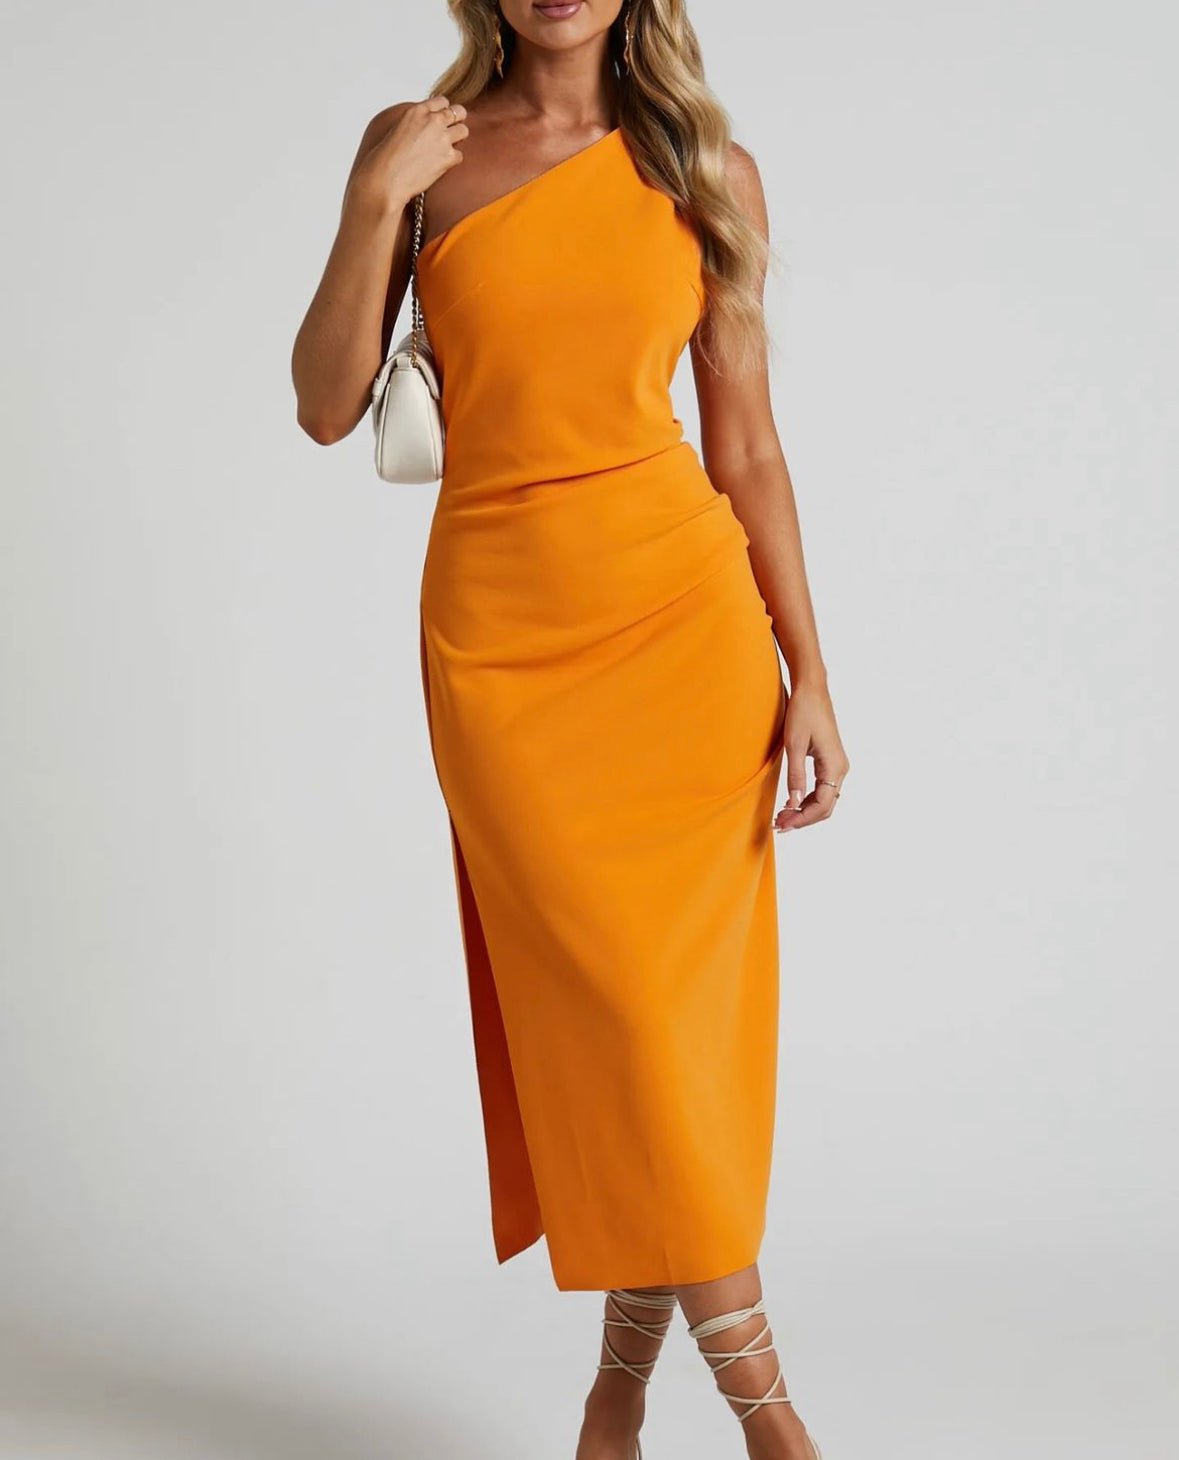 Gia Dress (Orange) - Something For Me​​